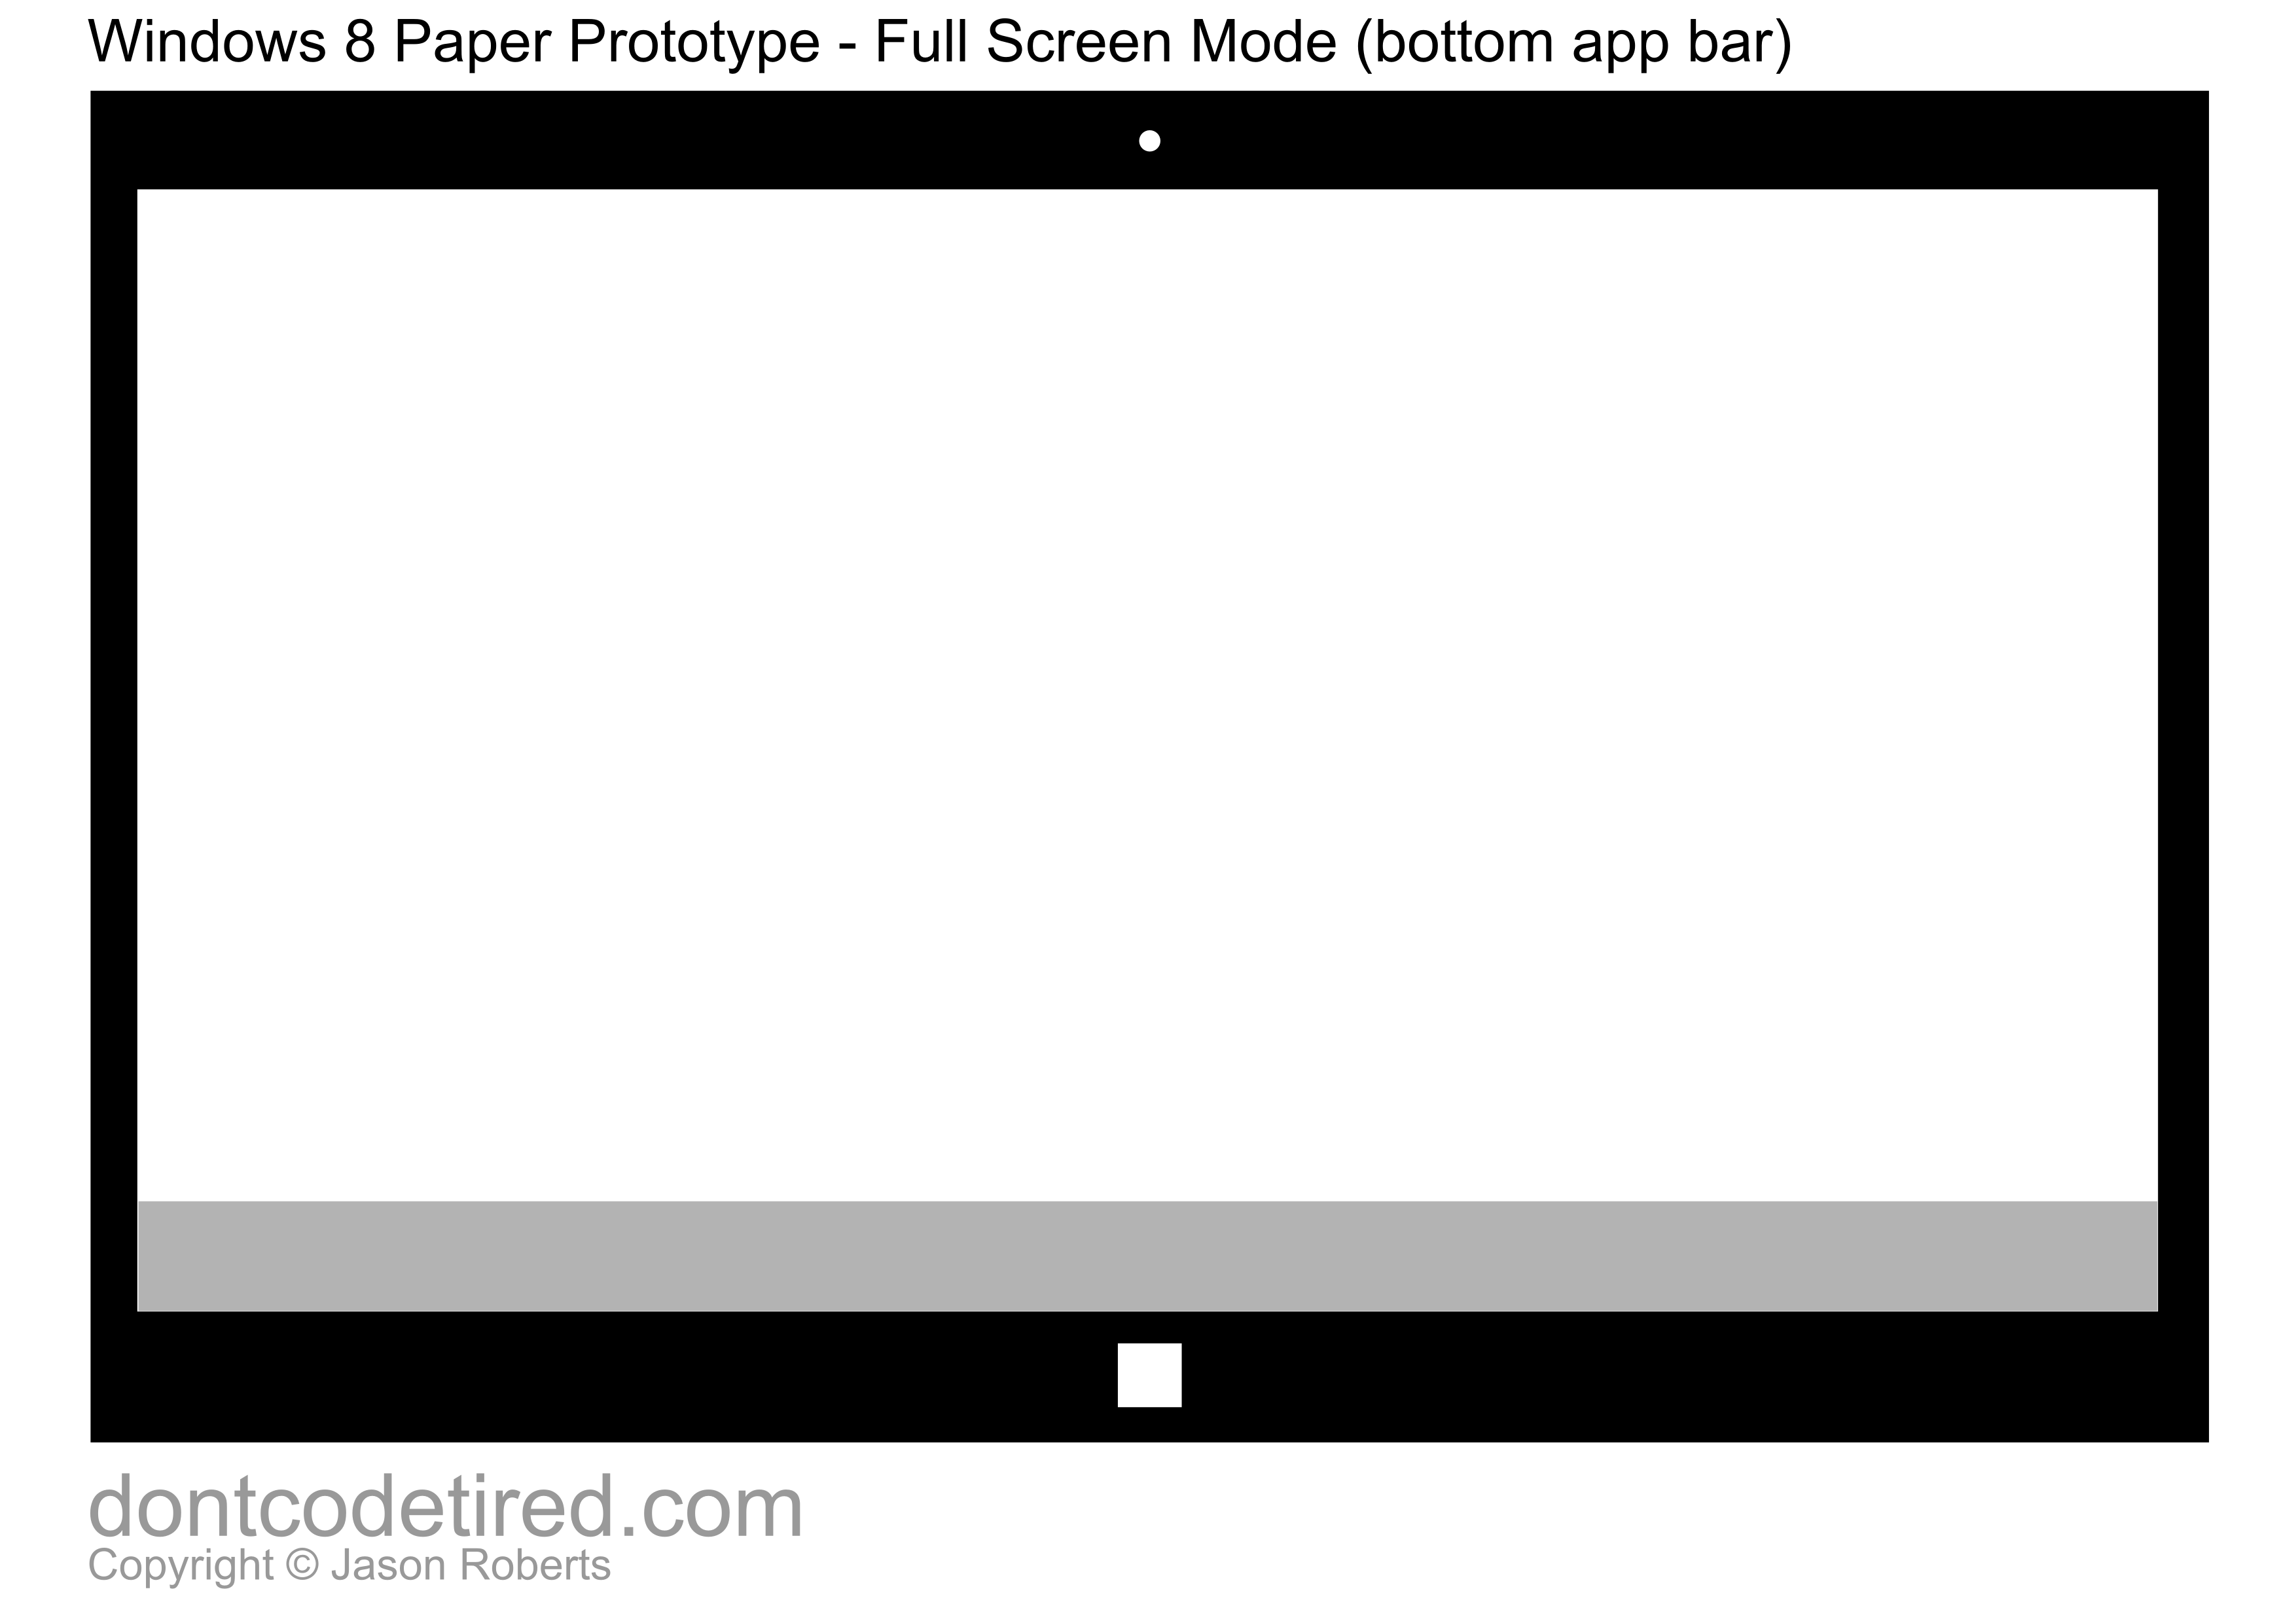 Windows 8 Paper Prototype template - full screen bottom app bar